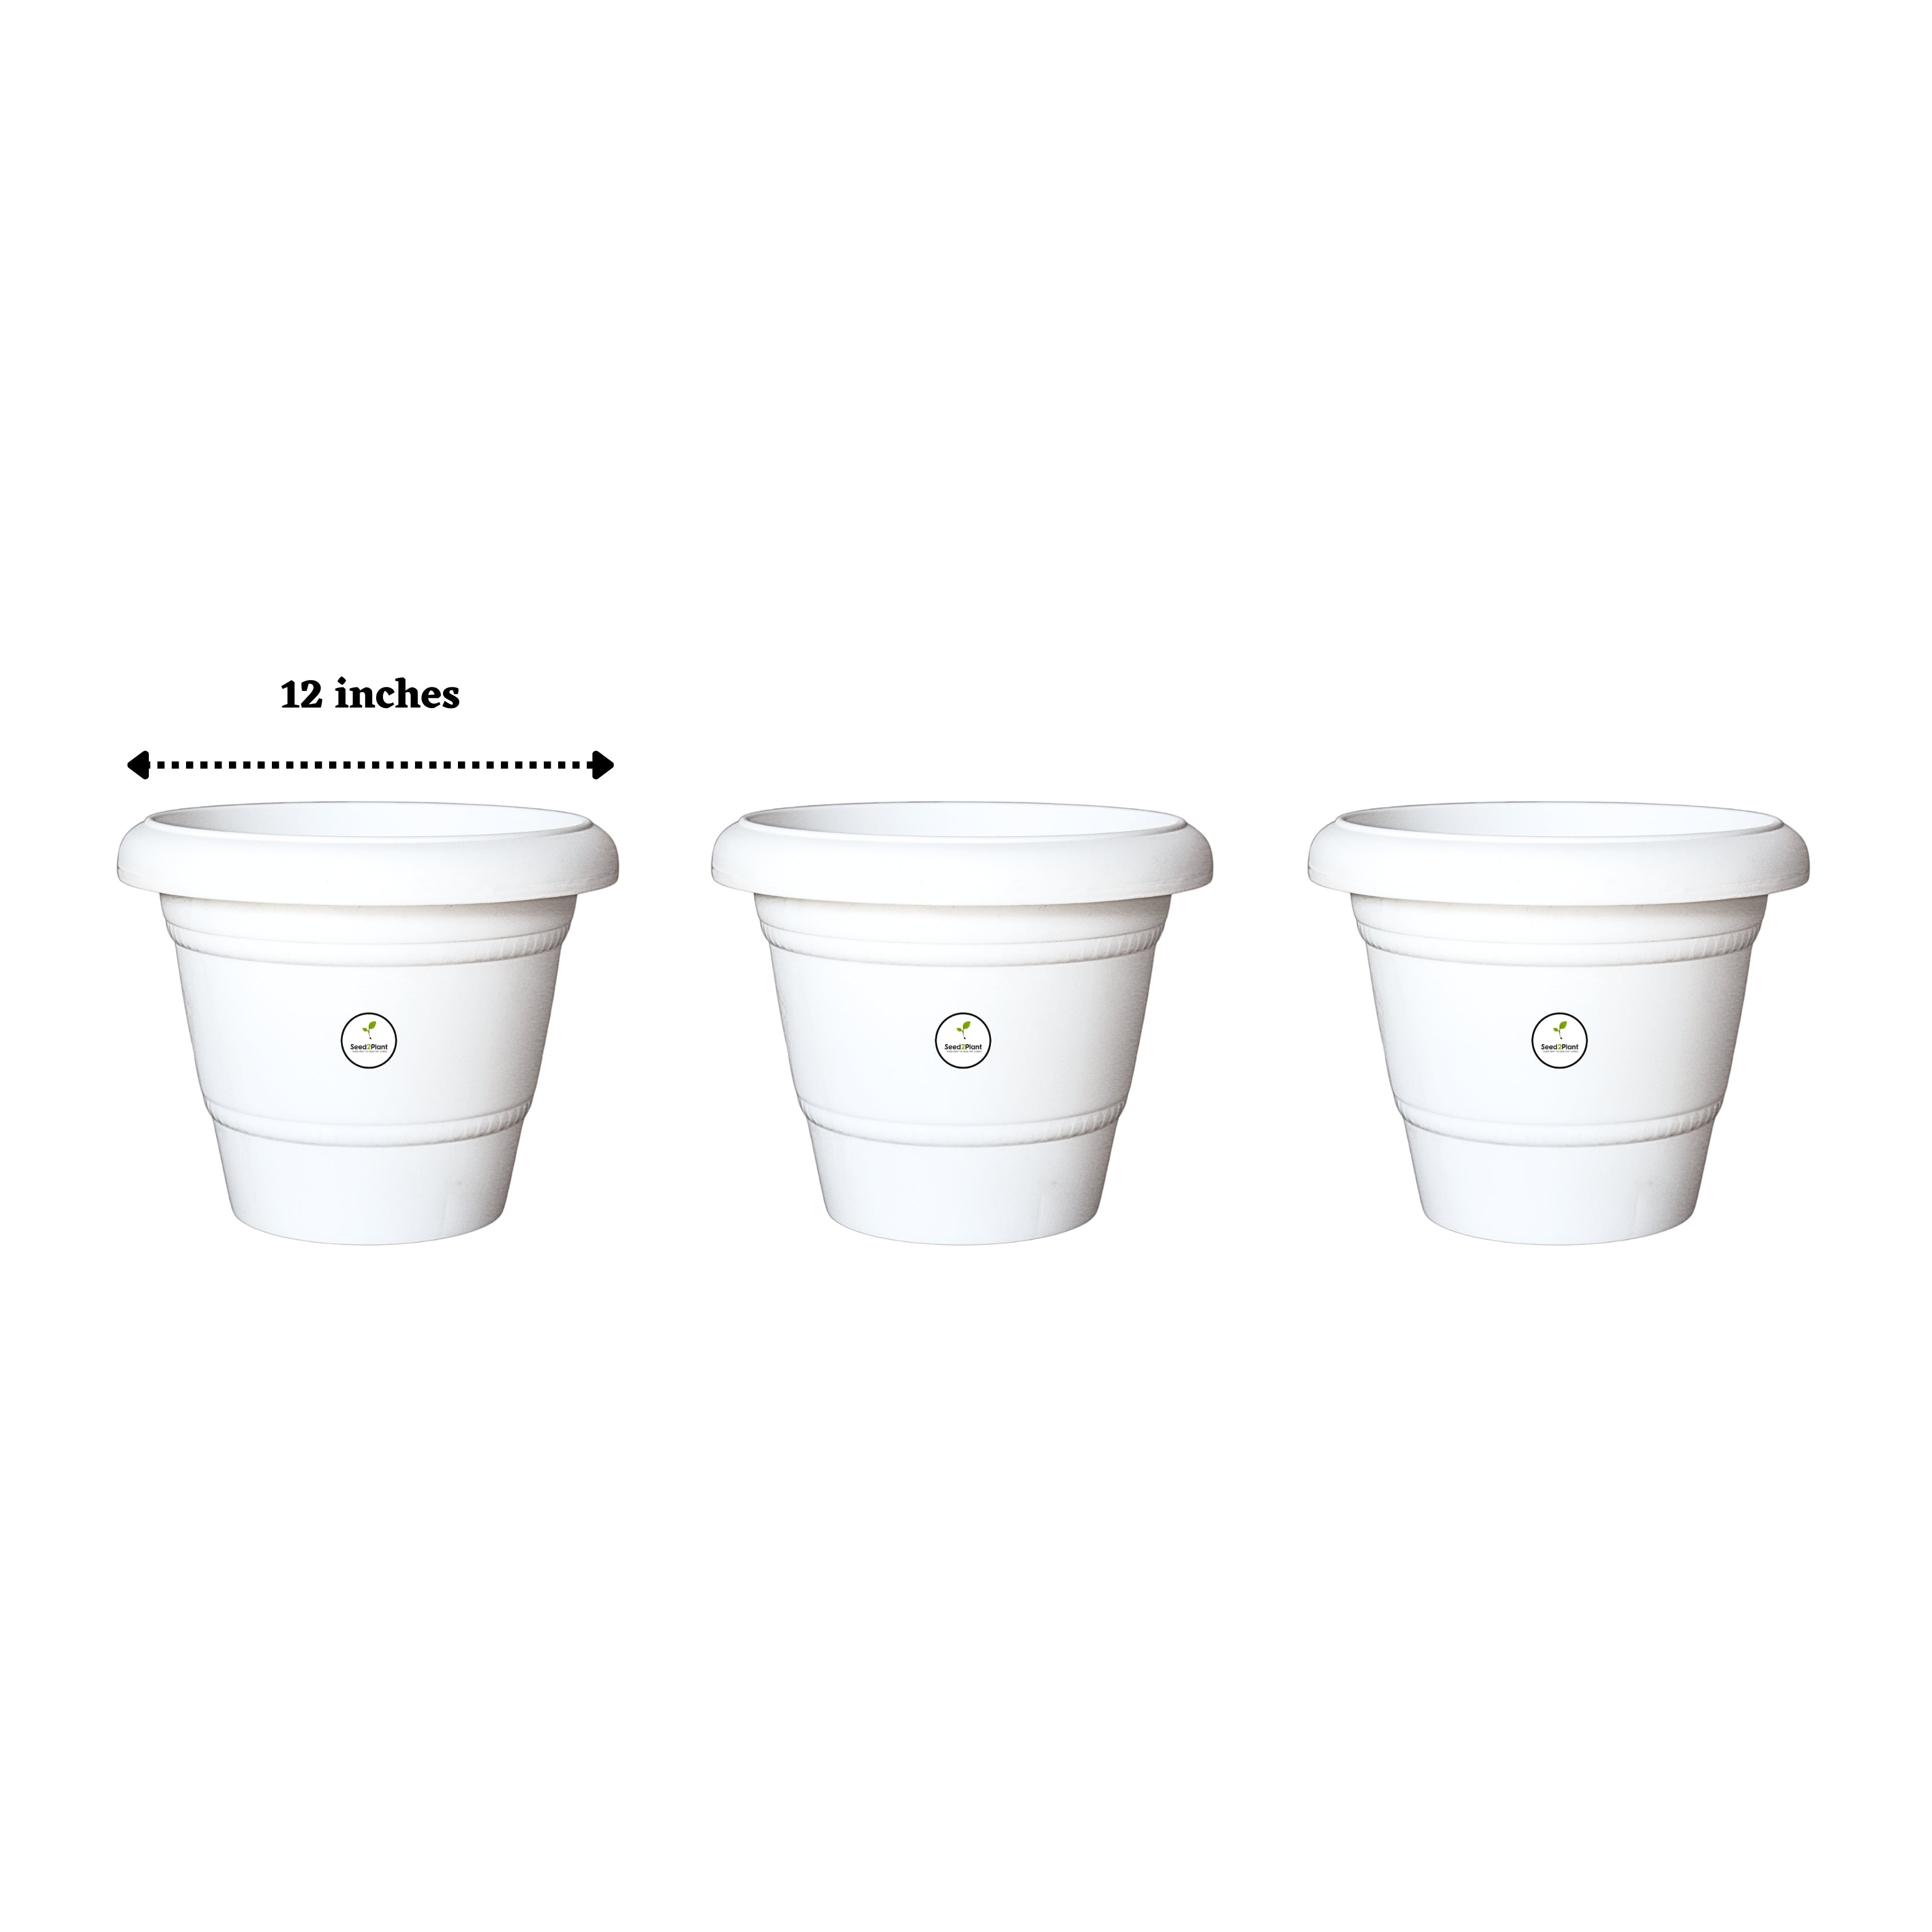 12 Inch Plastic Pots UV Treated - White Colour